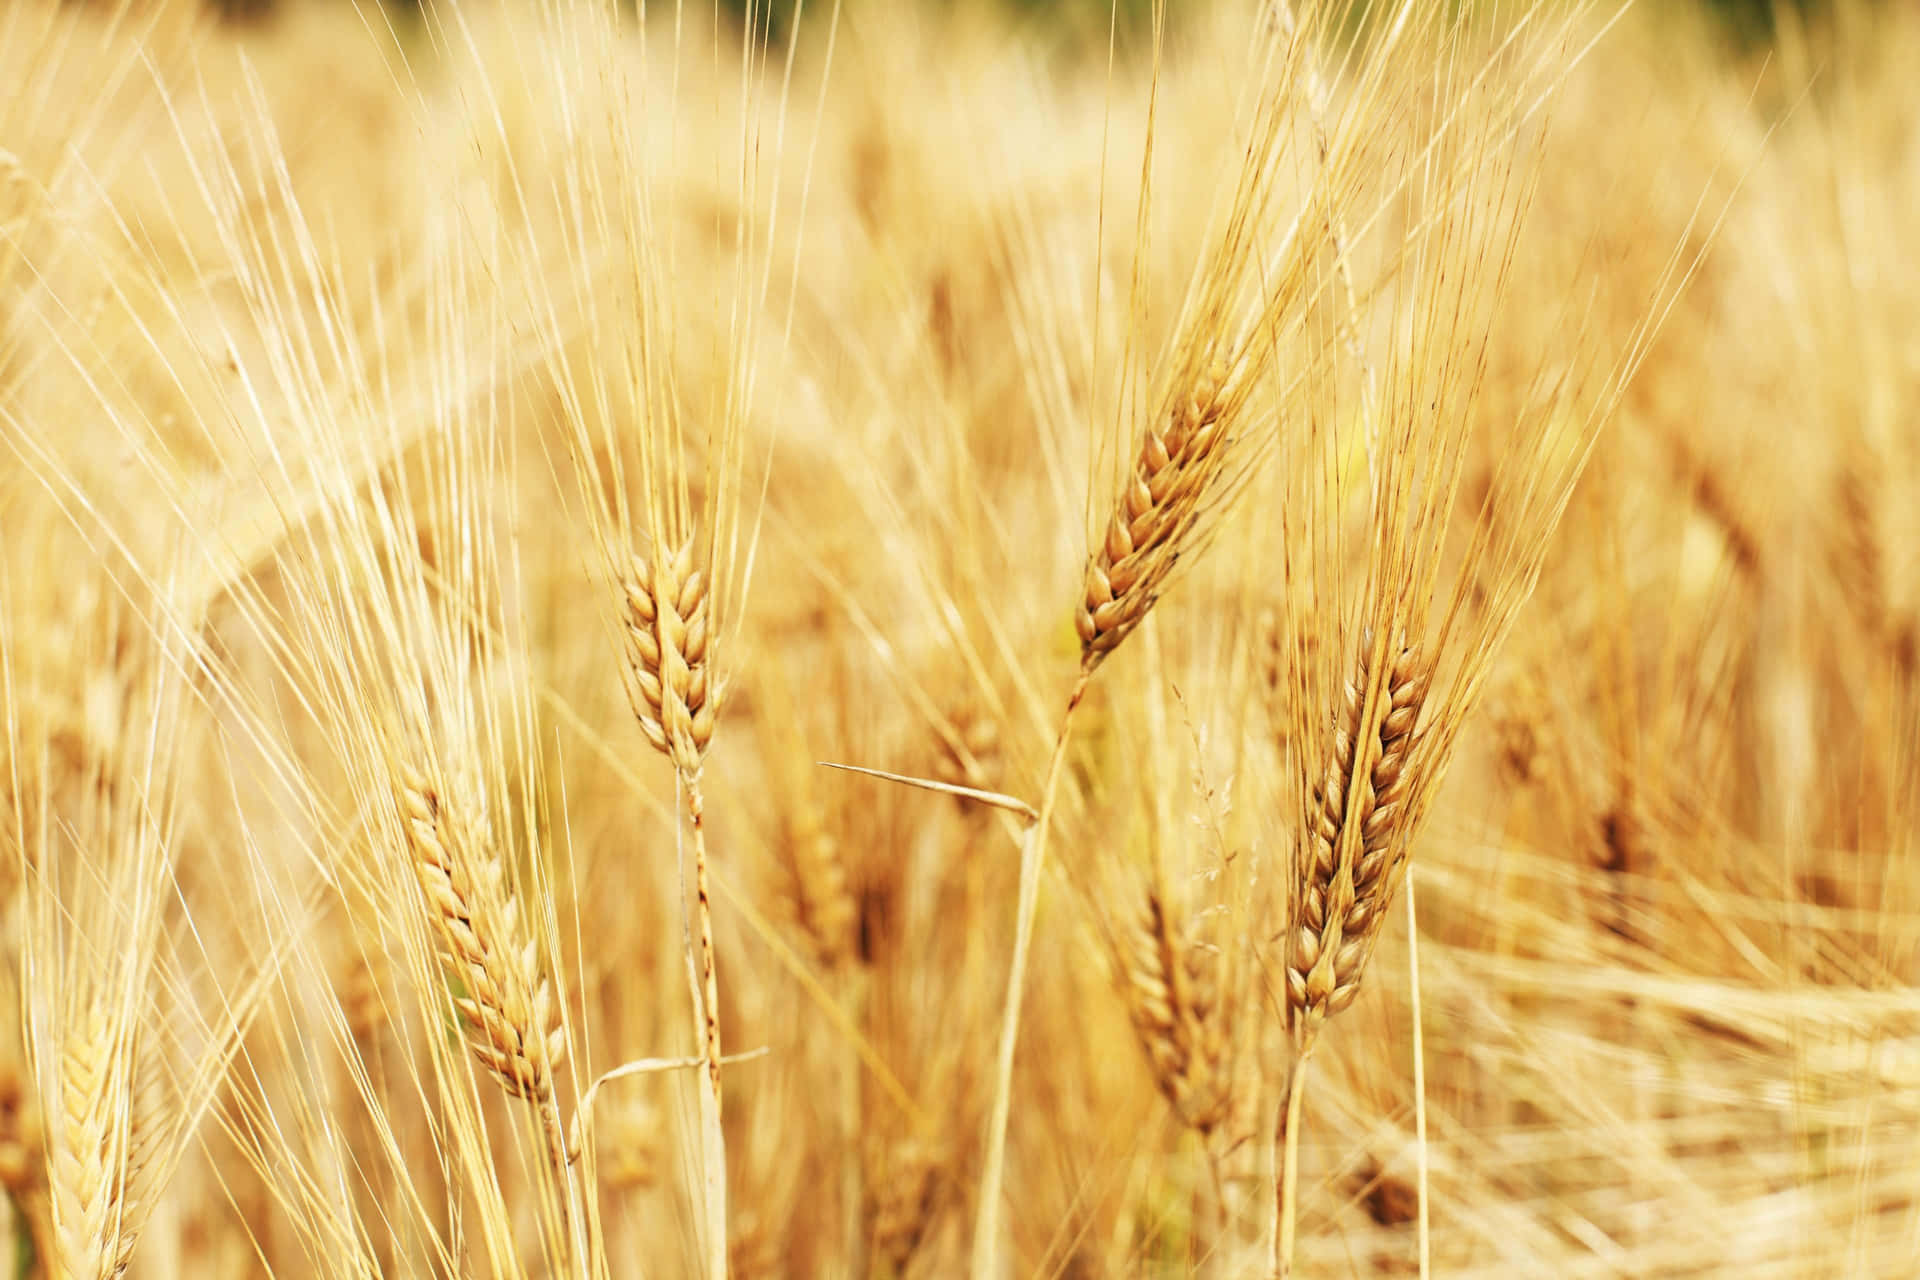 Golden Wheat field brings beauty to a rural landscape